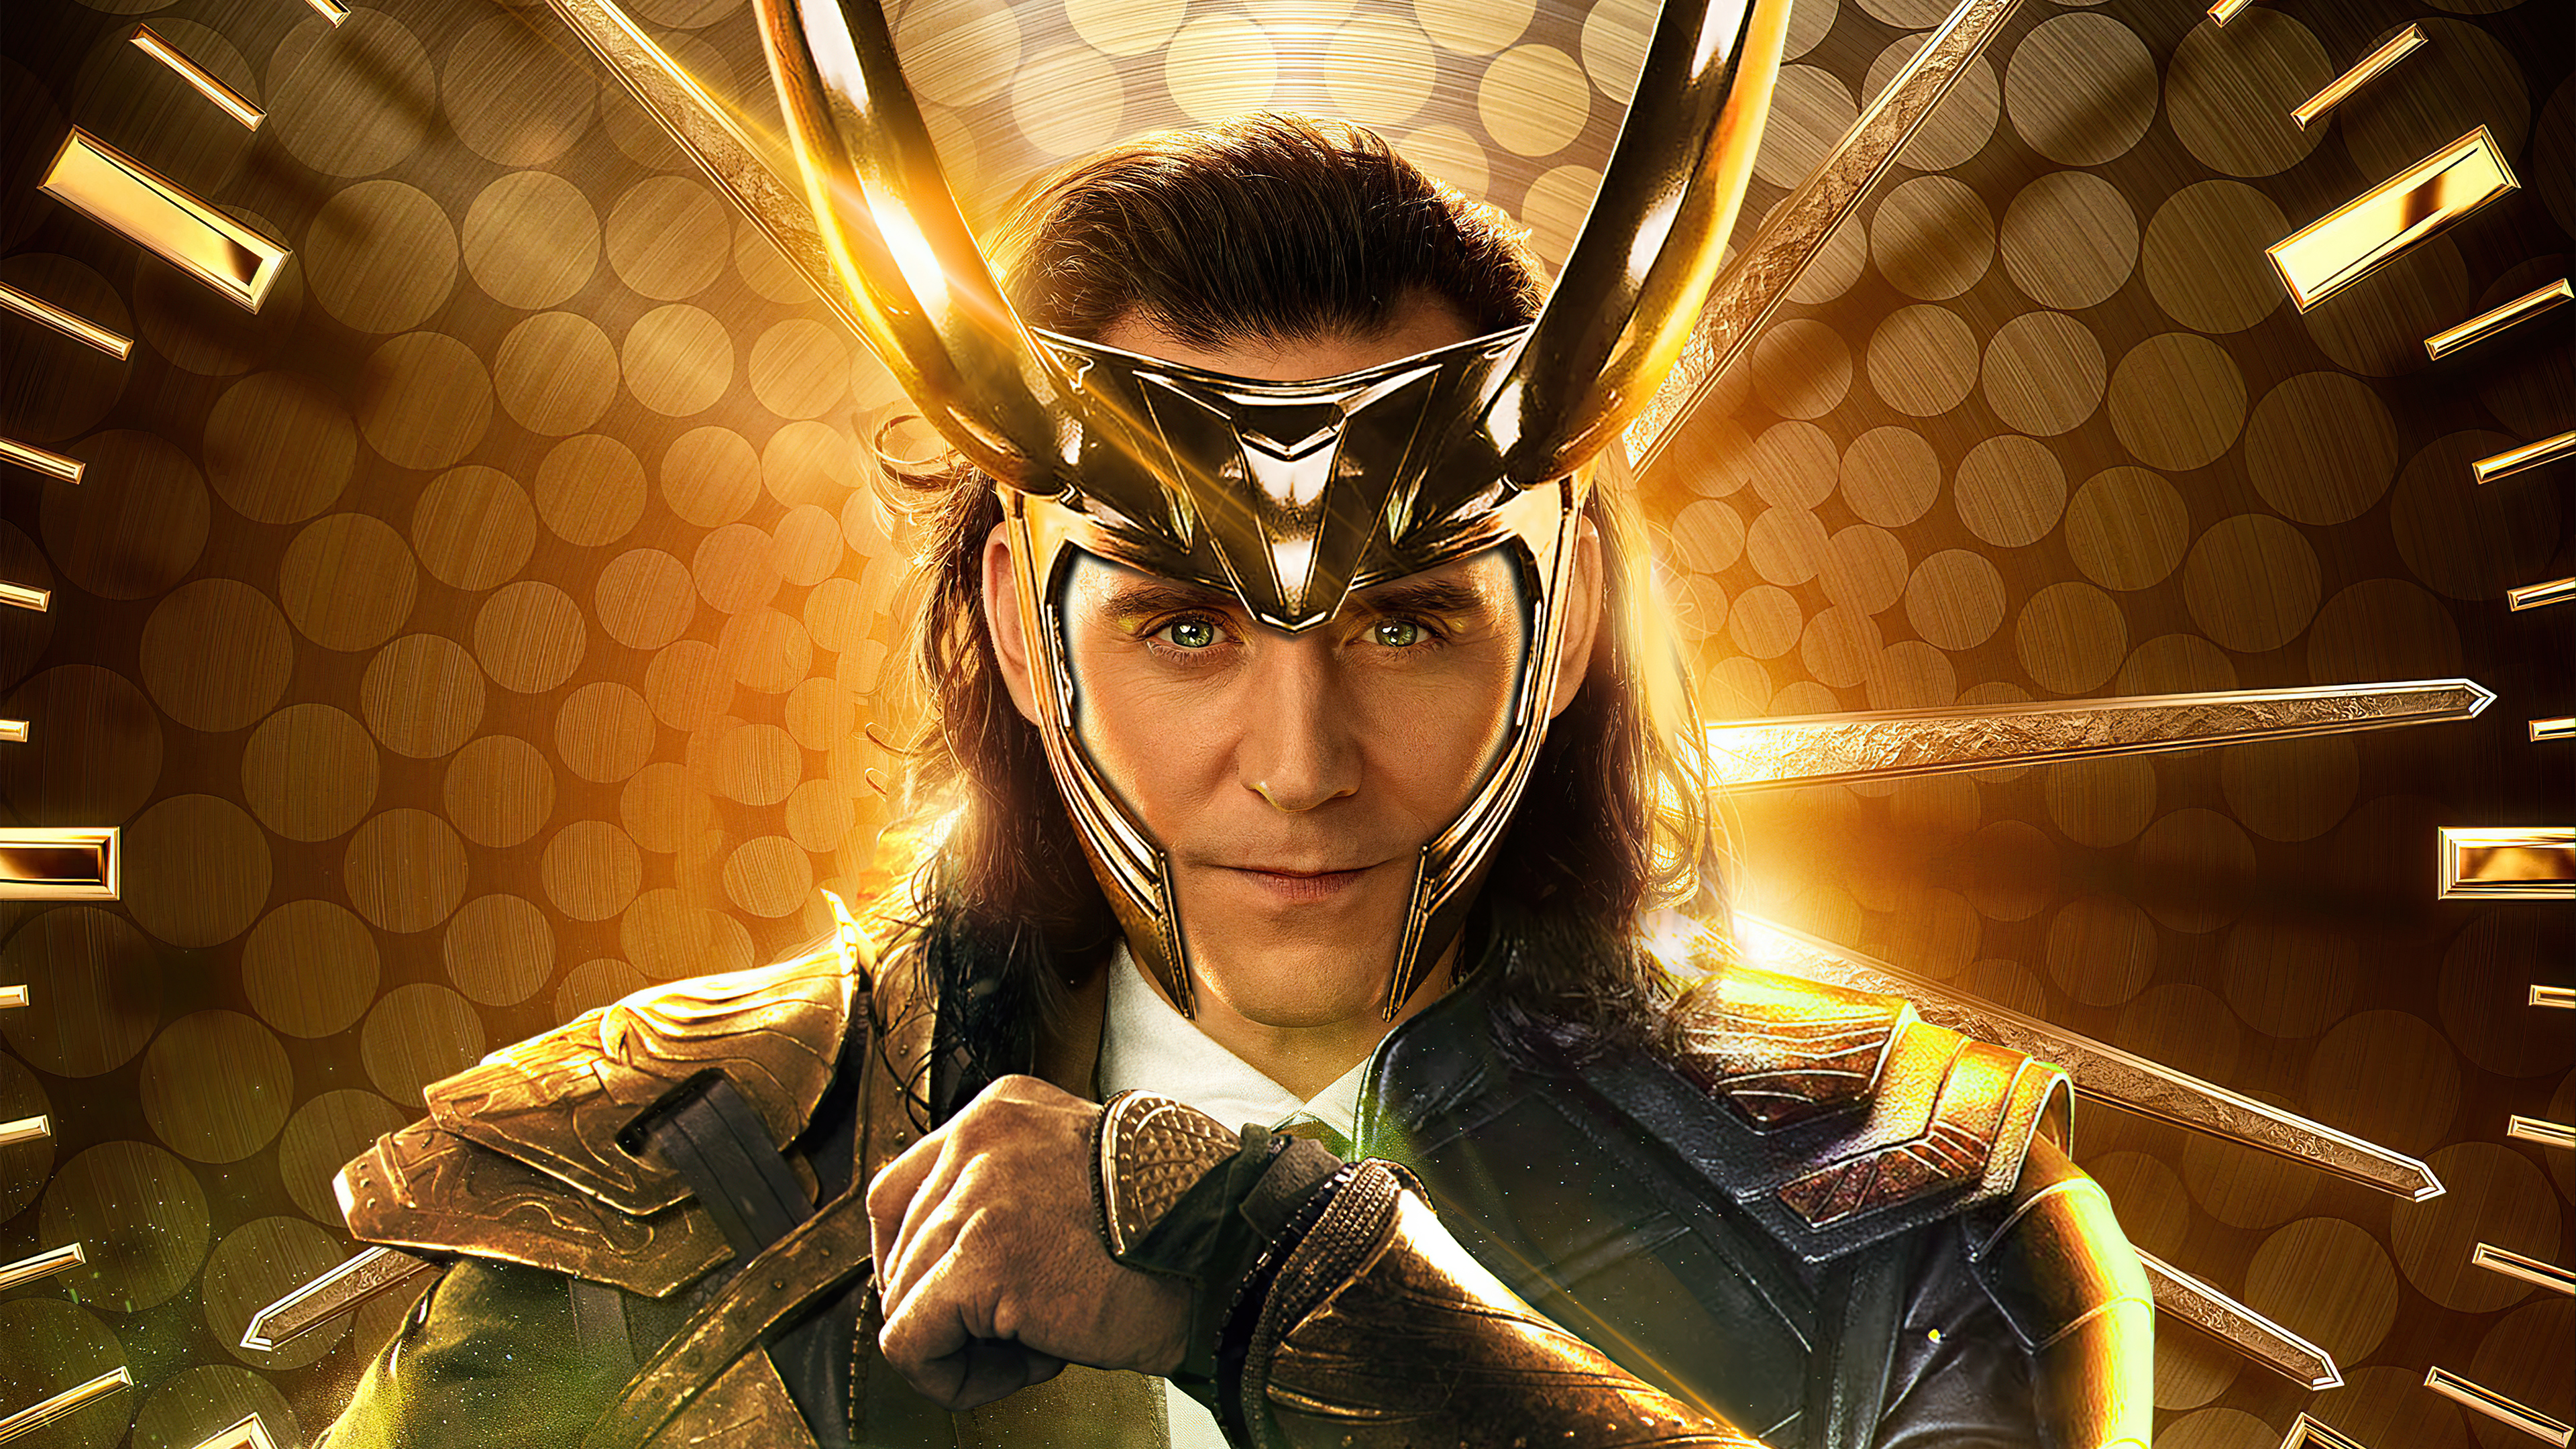 Marvel Studios Loki 4K Ultra HD Mobile Wallpaper